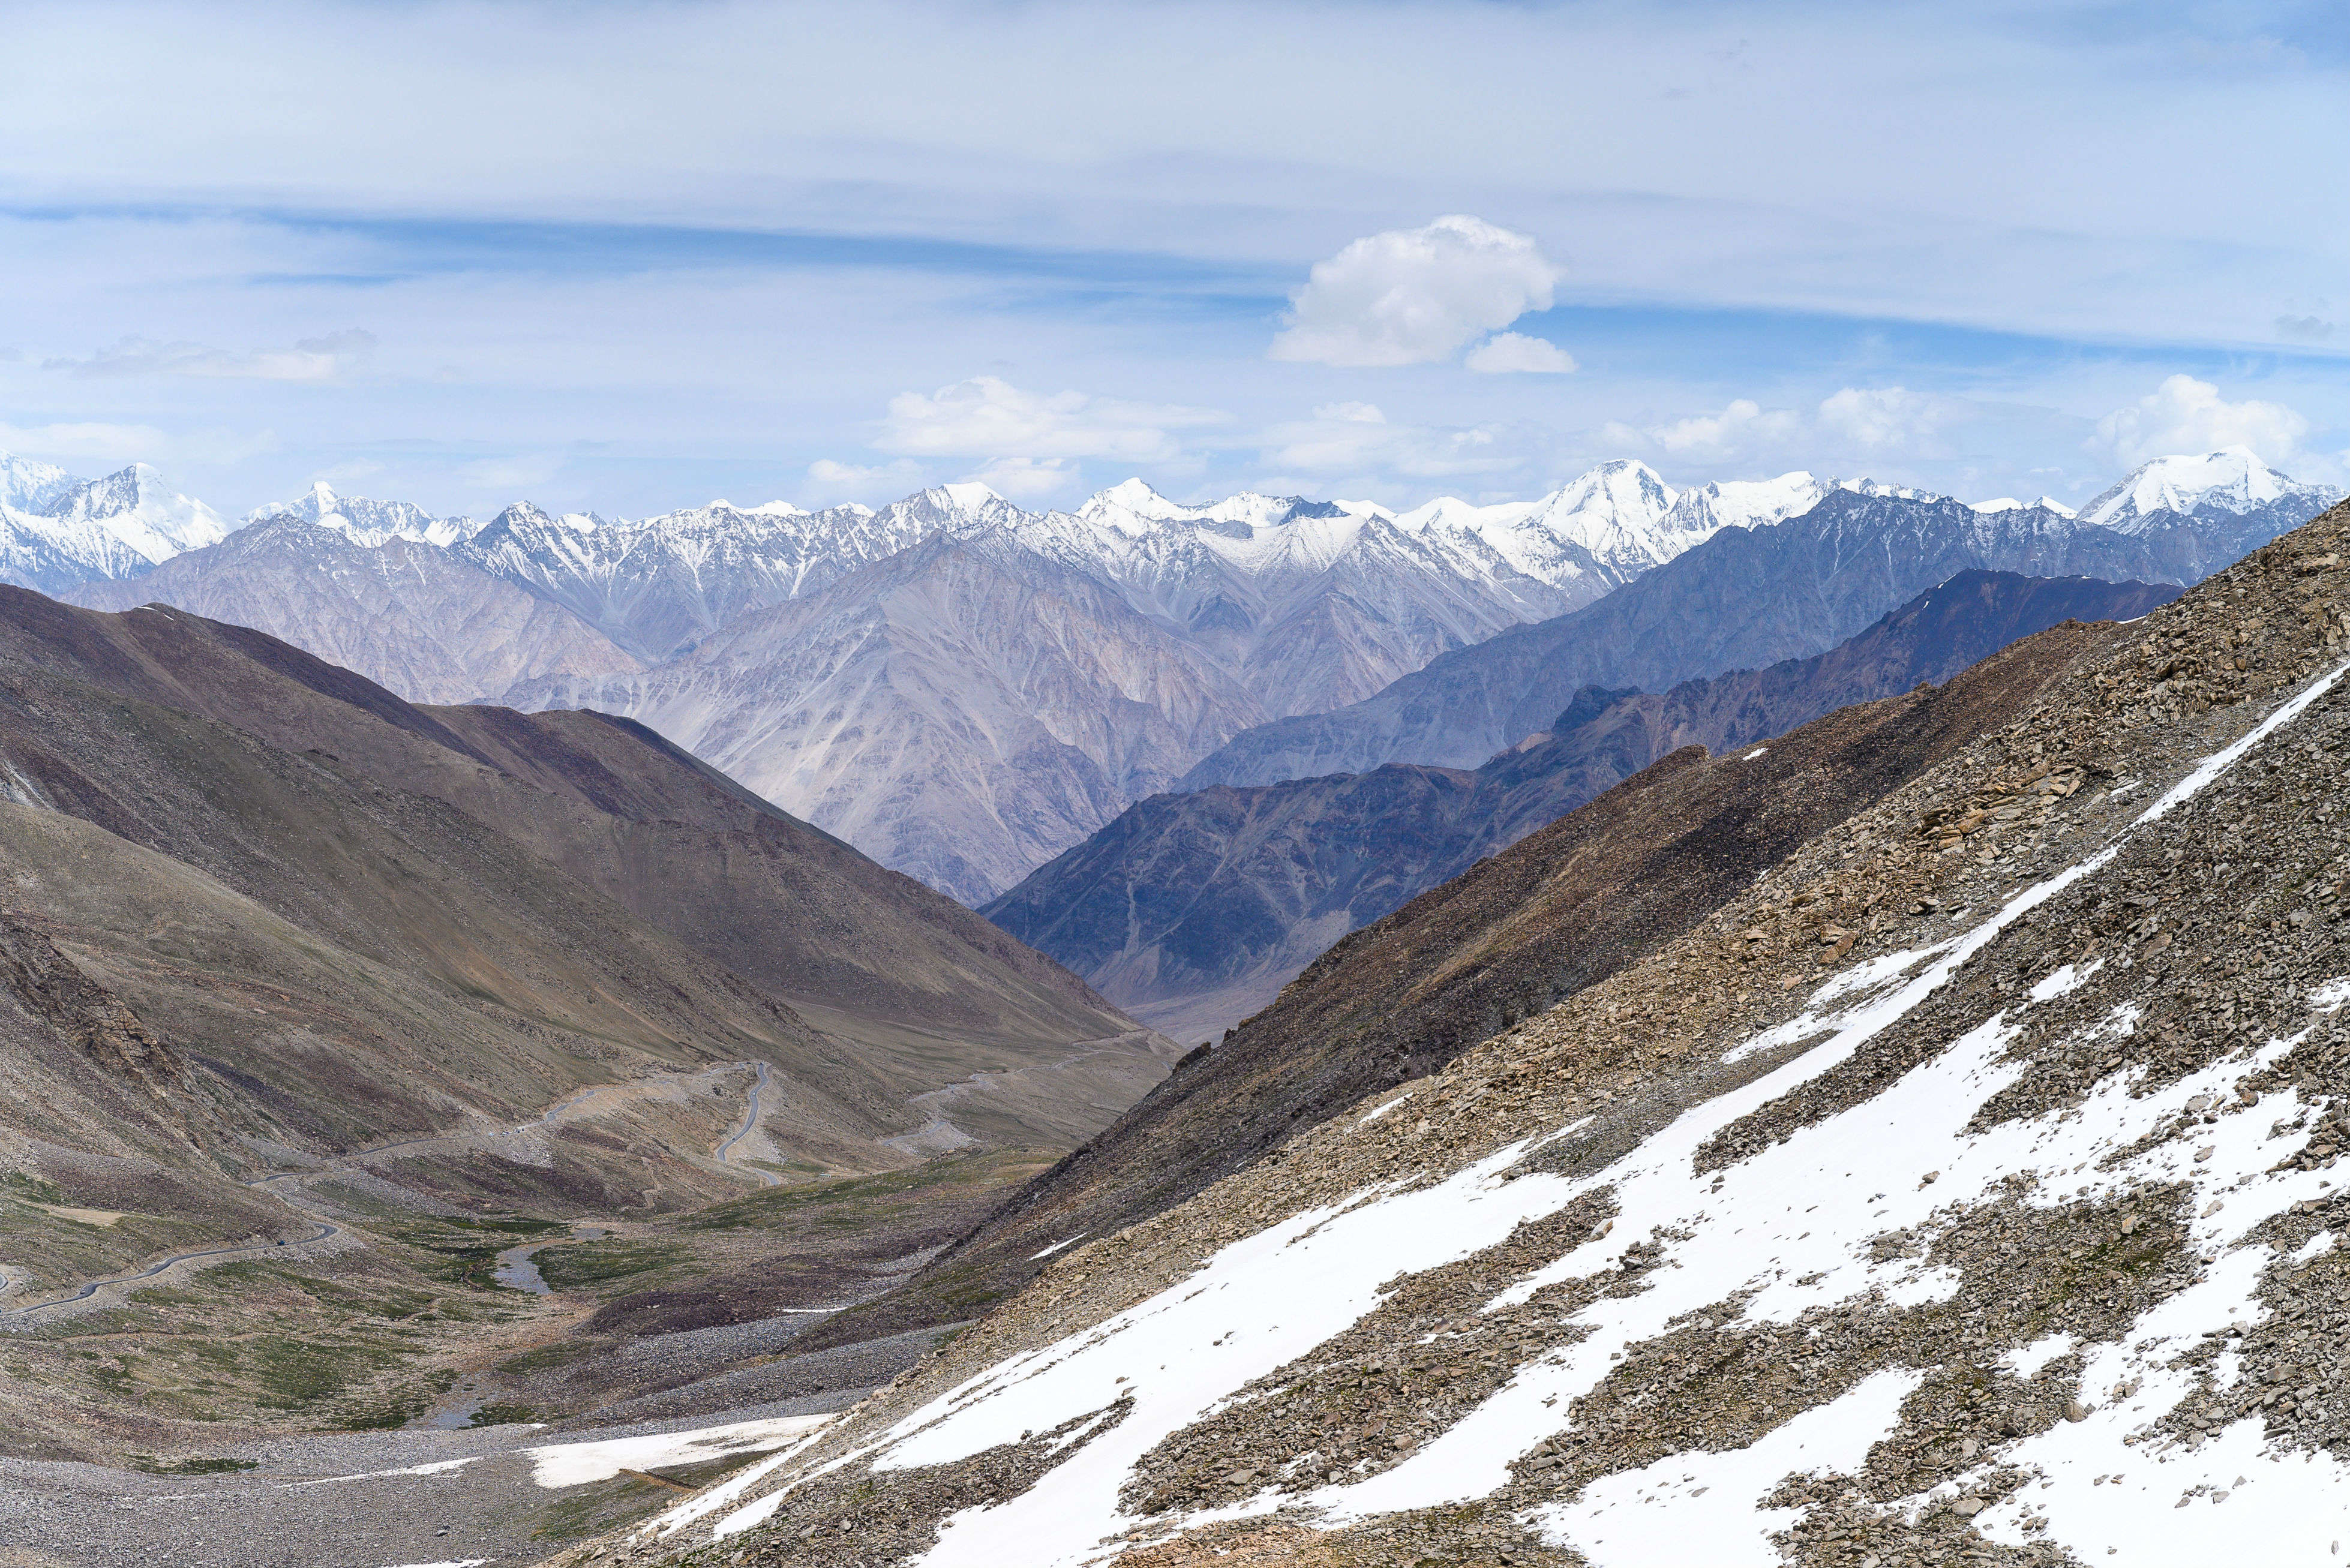 Siachen glacier opens for tourism—come visit the world’s highest battlefield